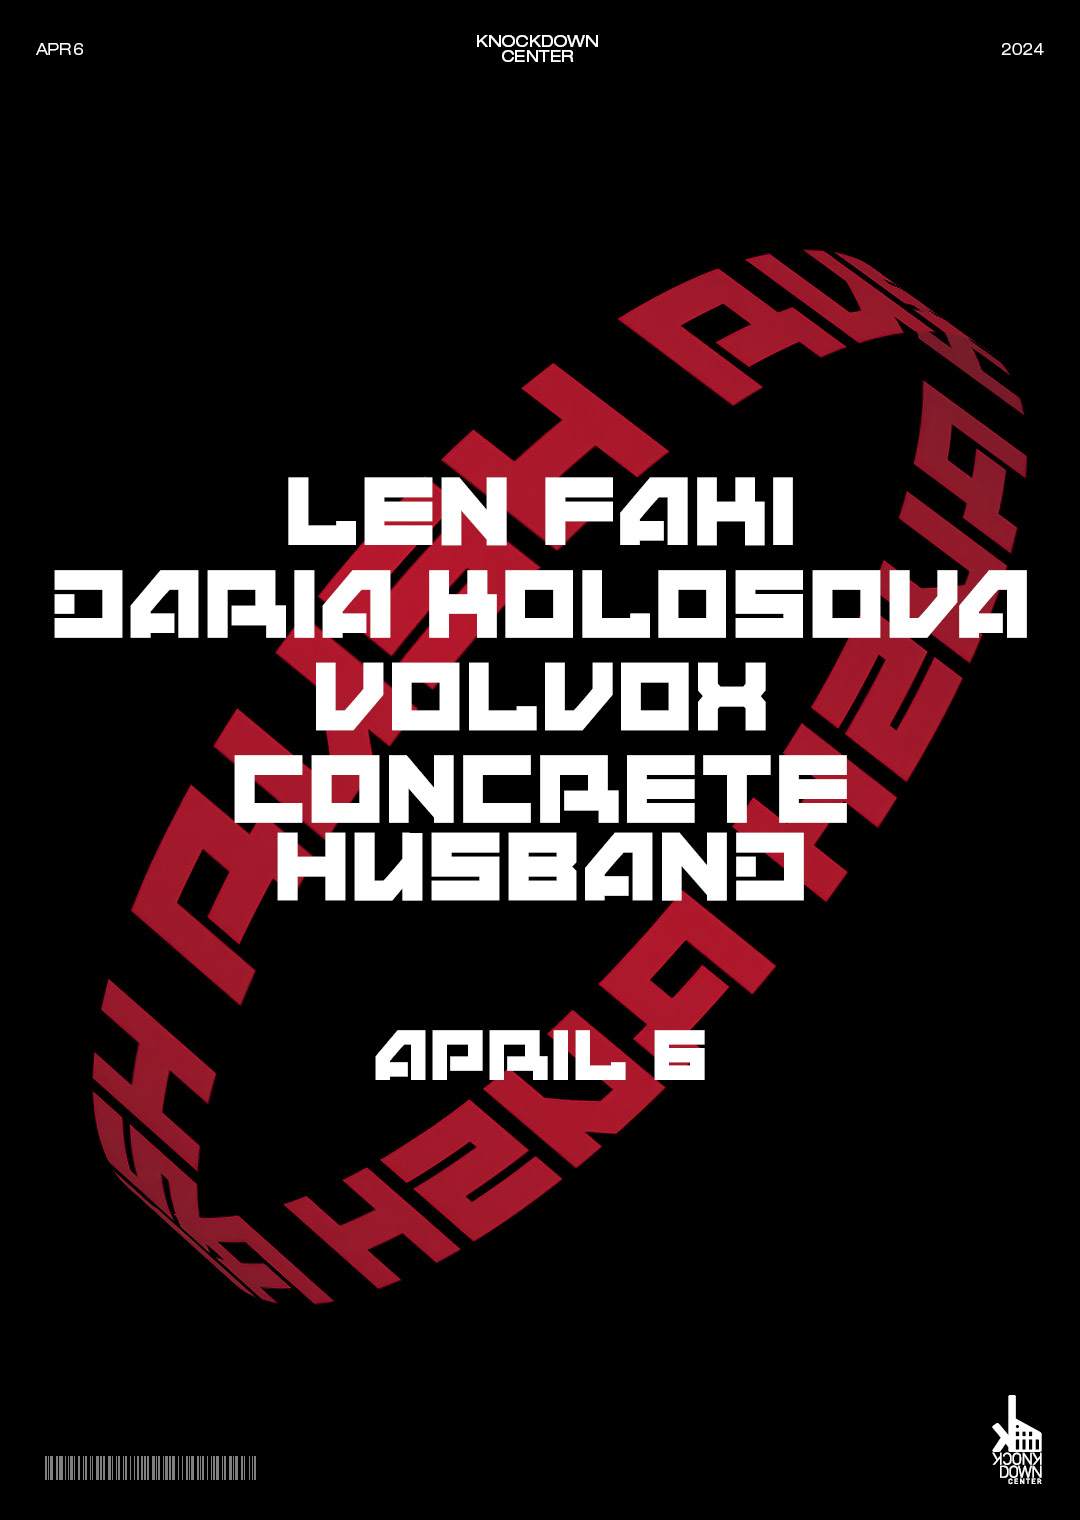 RUSH - Len Faki, Daria Kolosova, Volvox, Concrete Husband - Página frontal